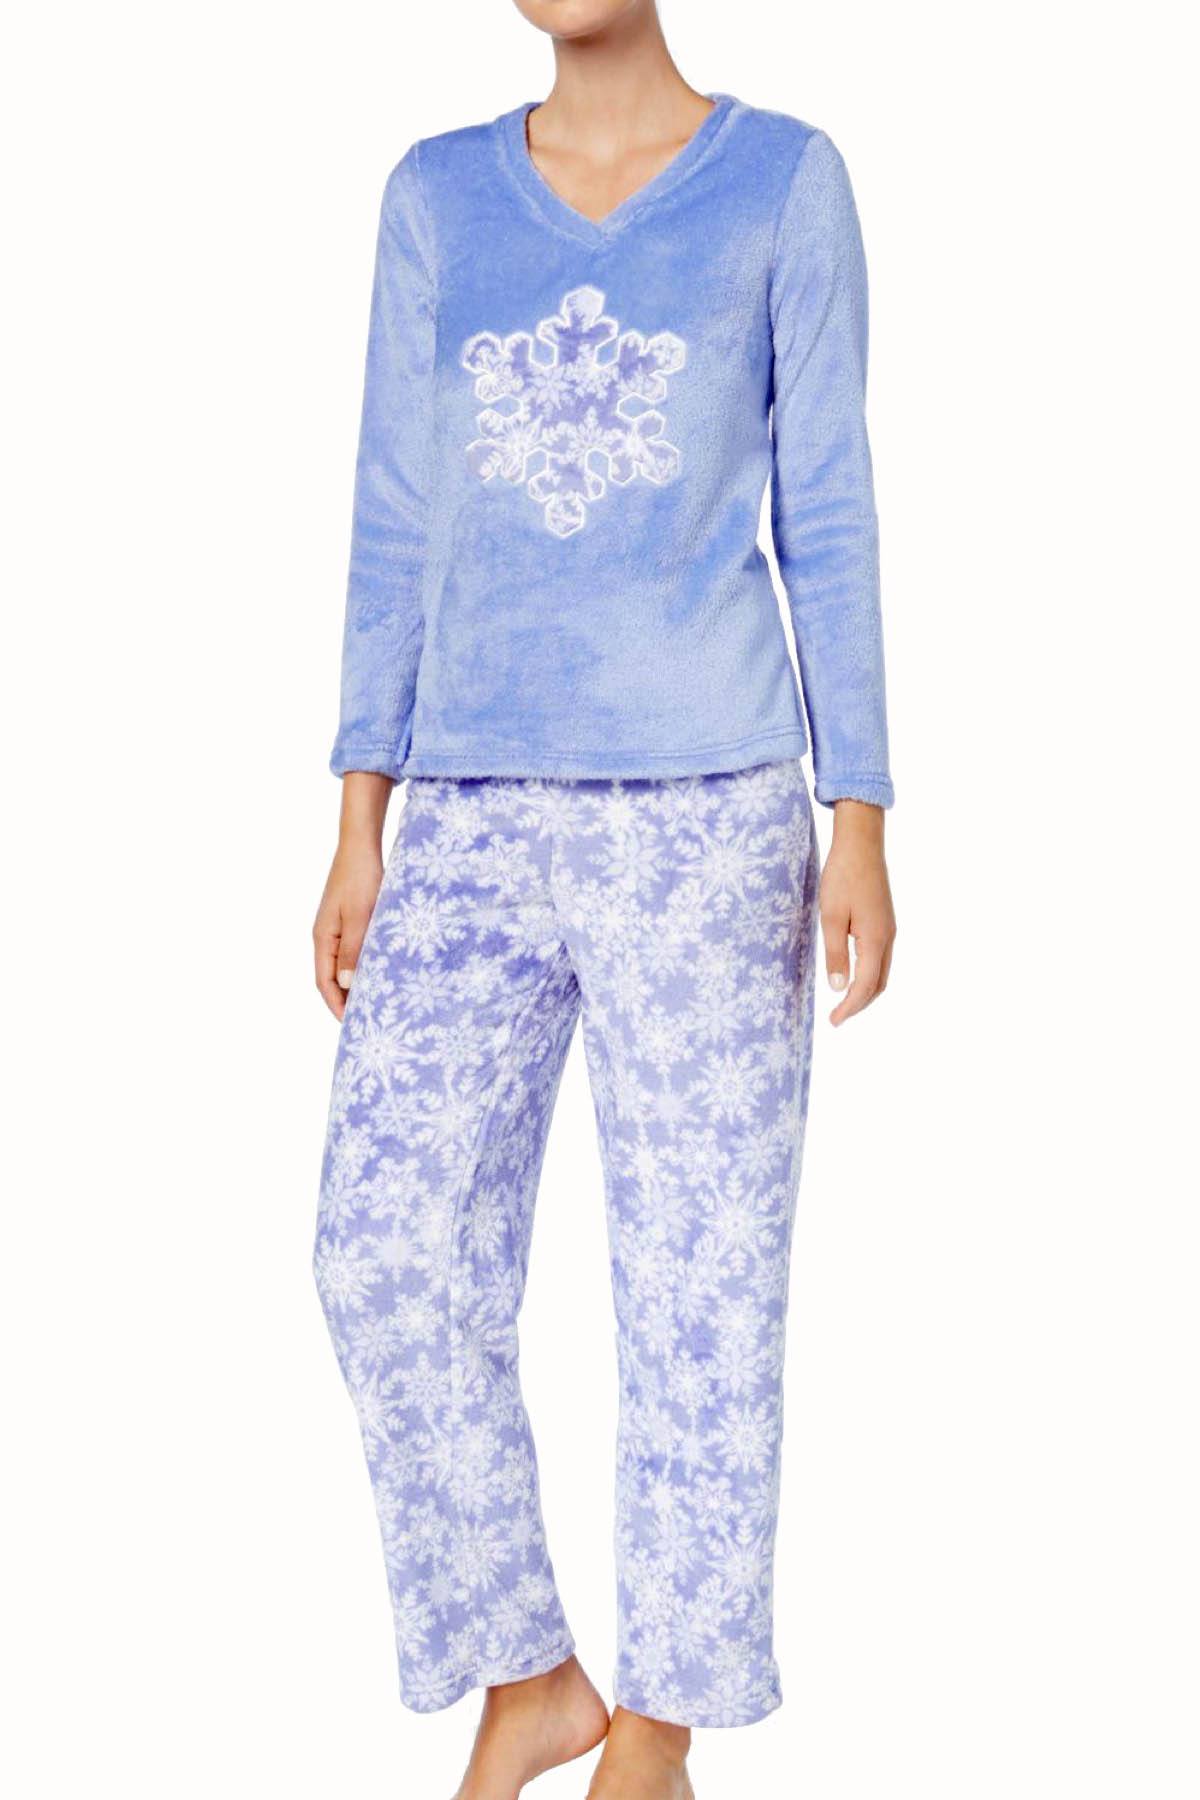 Charter Club Intimates Fancy-Snowflake Plush Applique Pajama Set